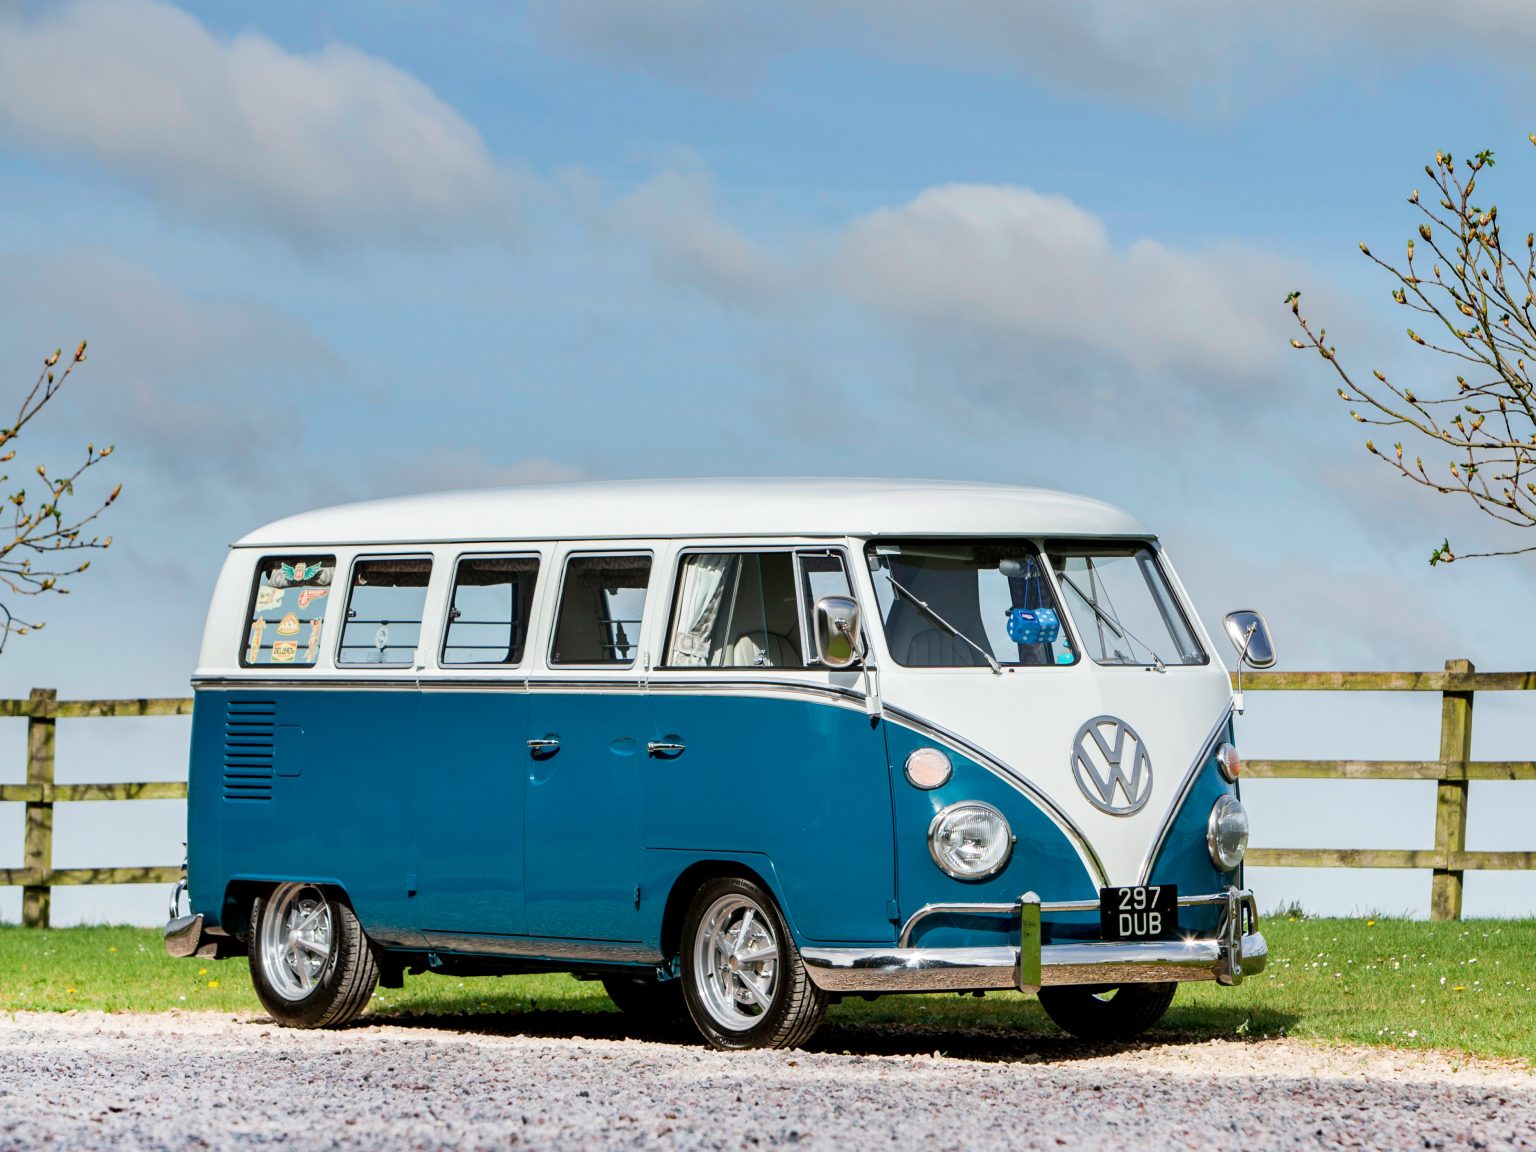 Classic VW camper van heads to Goodwood sale - Practical Motorhome